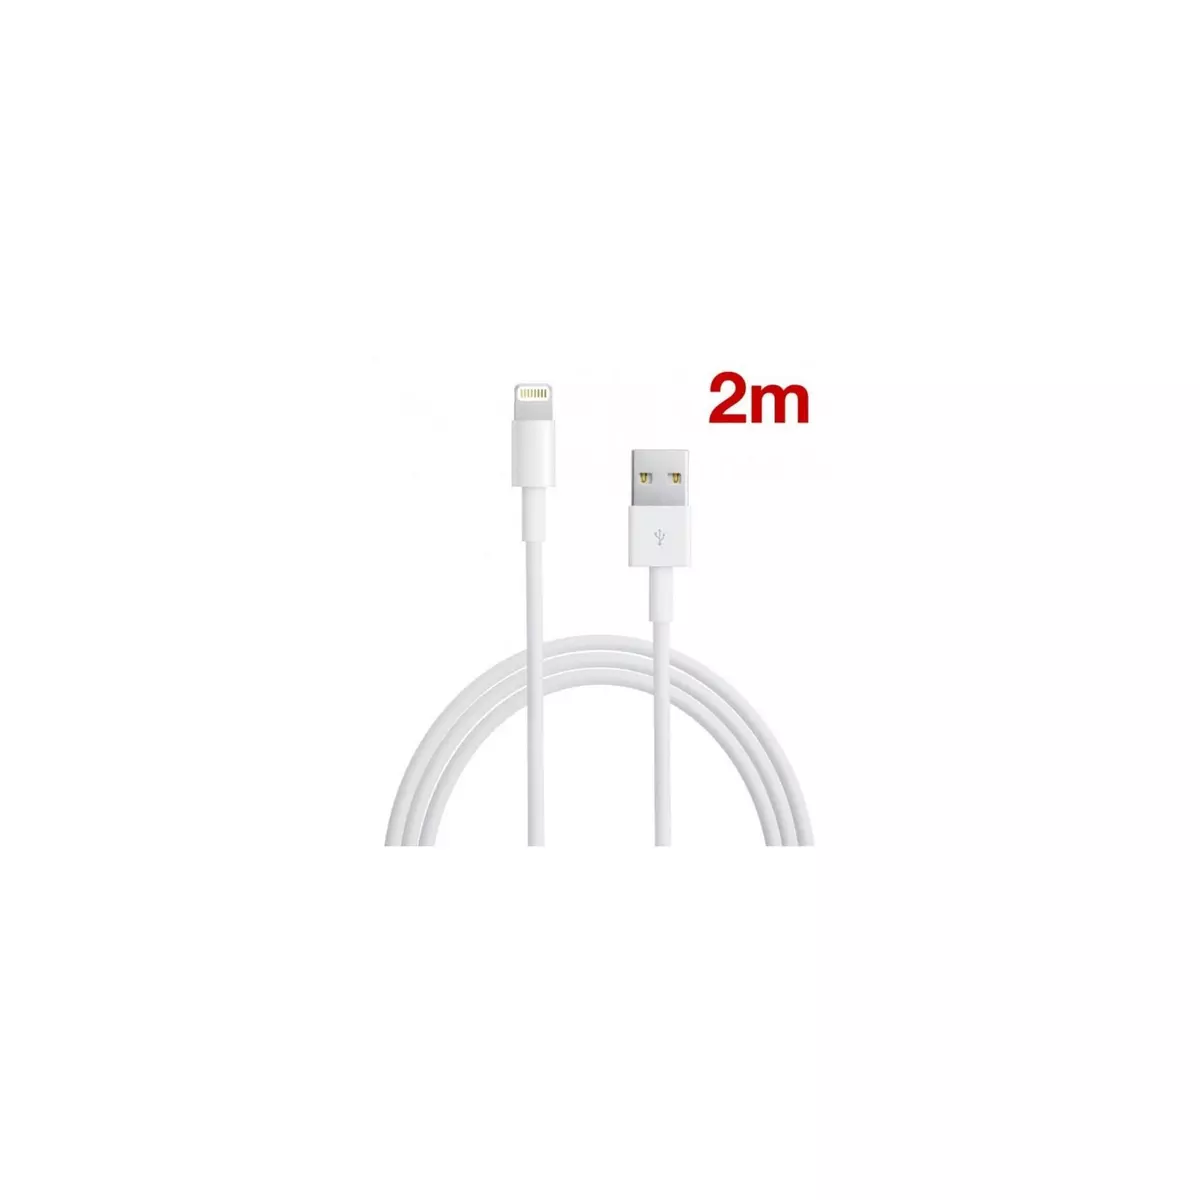  Câble Lightning 2 mètres pour iPhone 7/ 7 Plus origine Apple